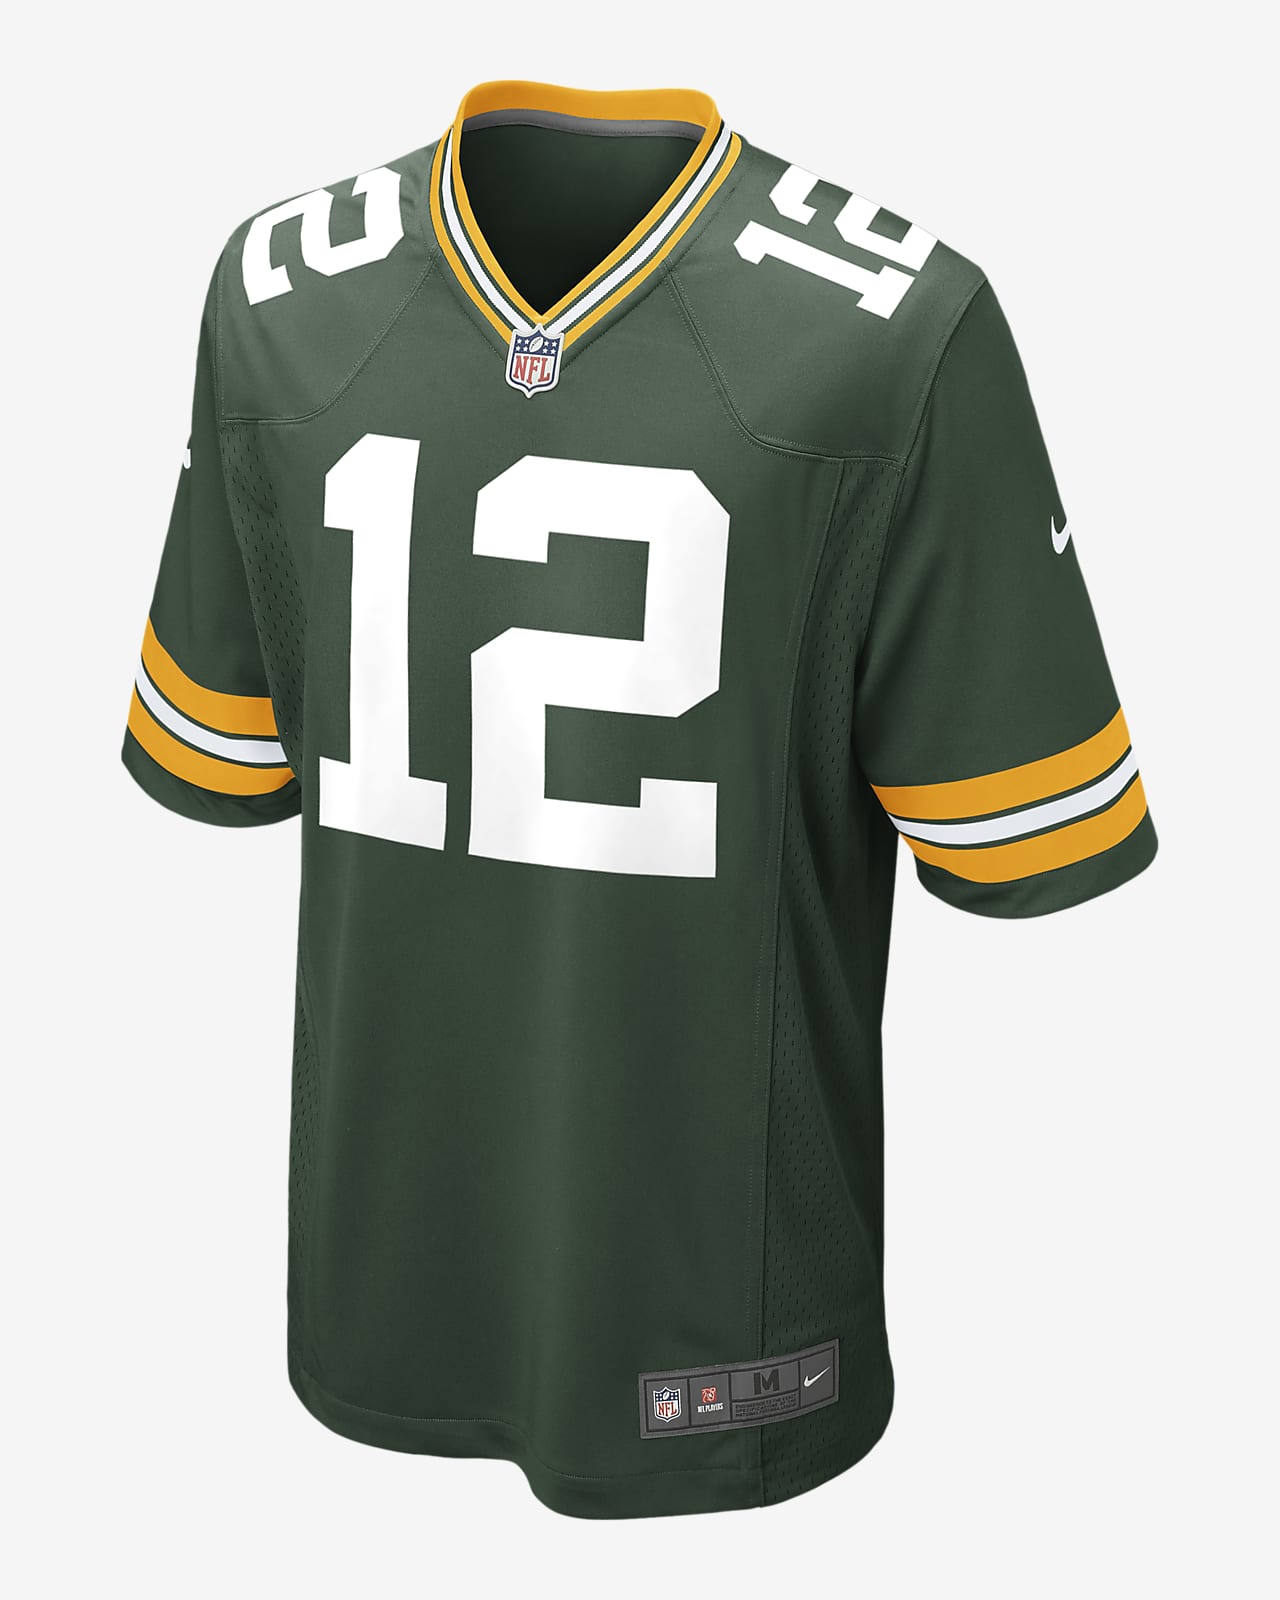 Pánský zápasový dres na americký fotbal NFL Green Bay Packers (Aaron Rodgers)